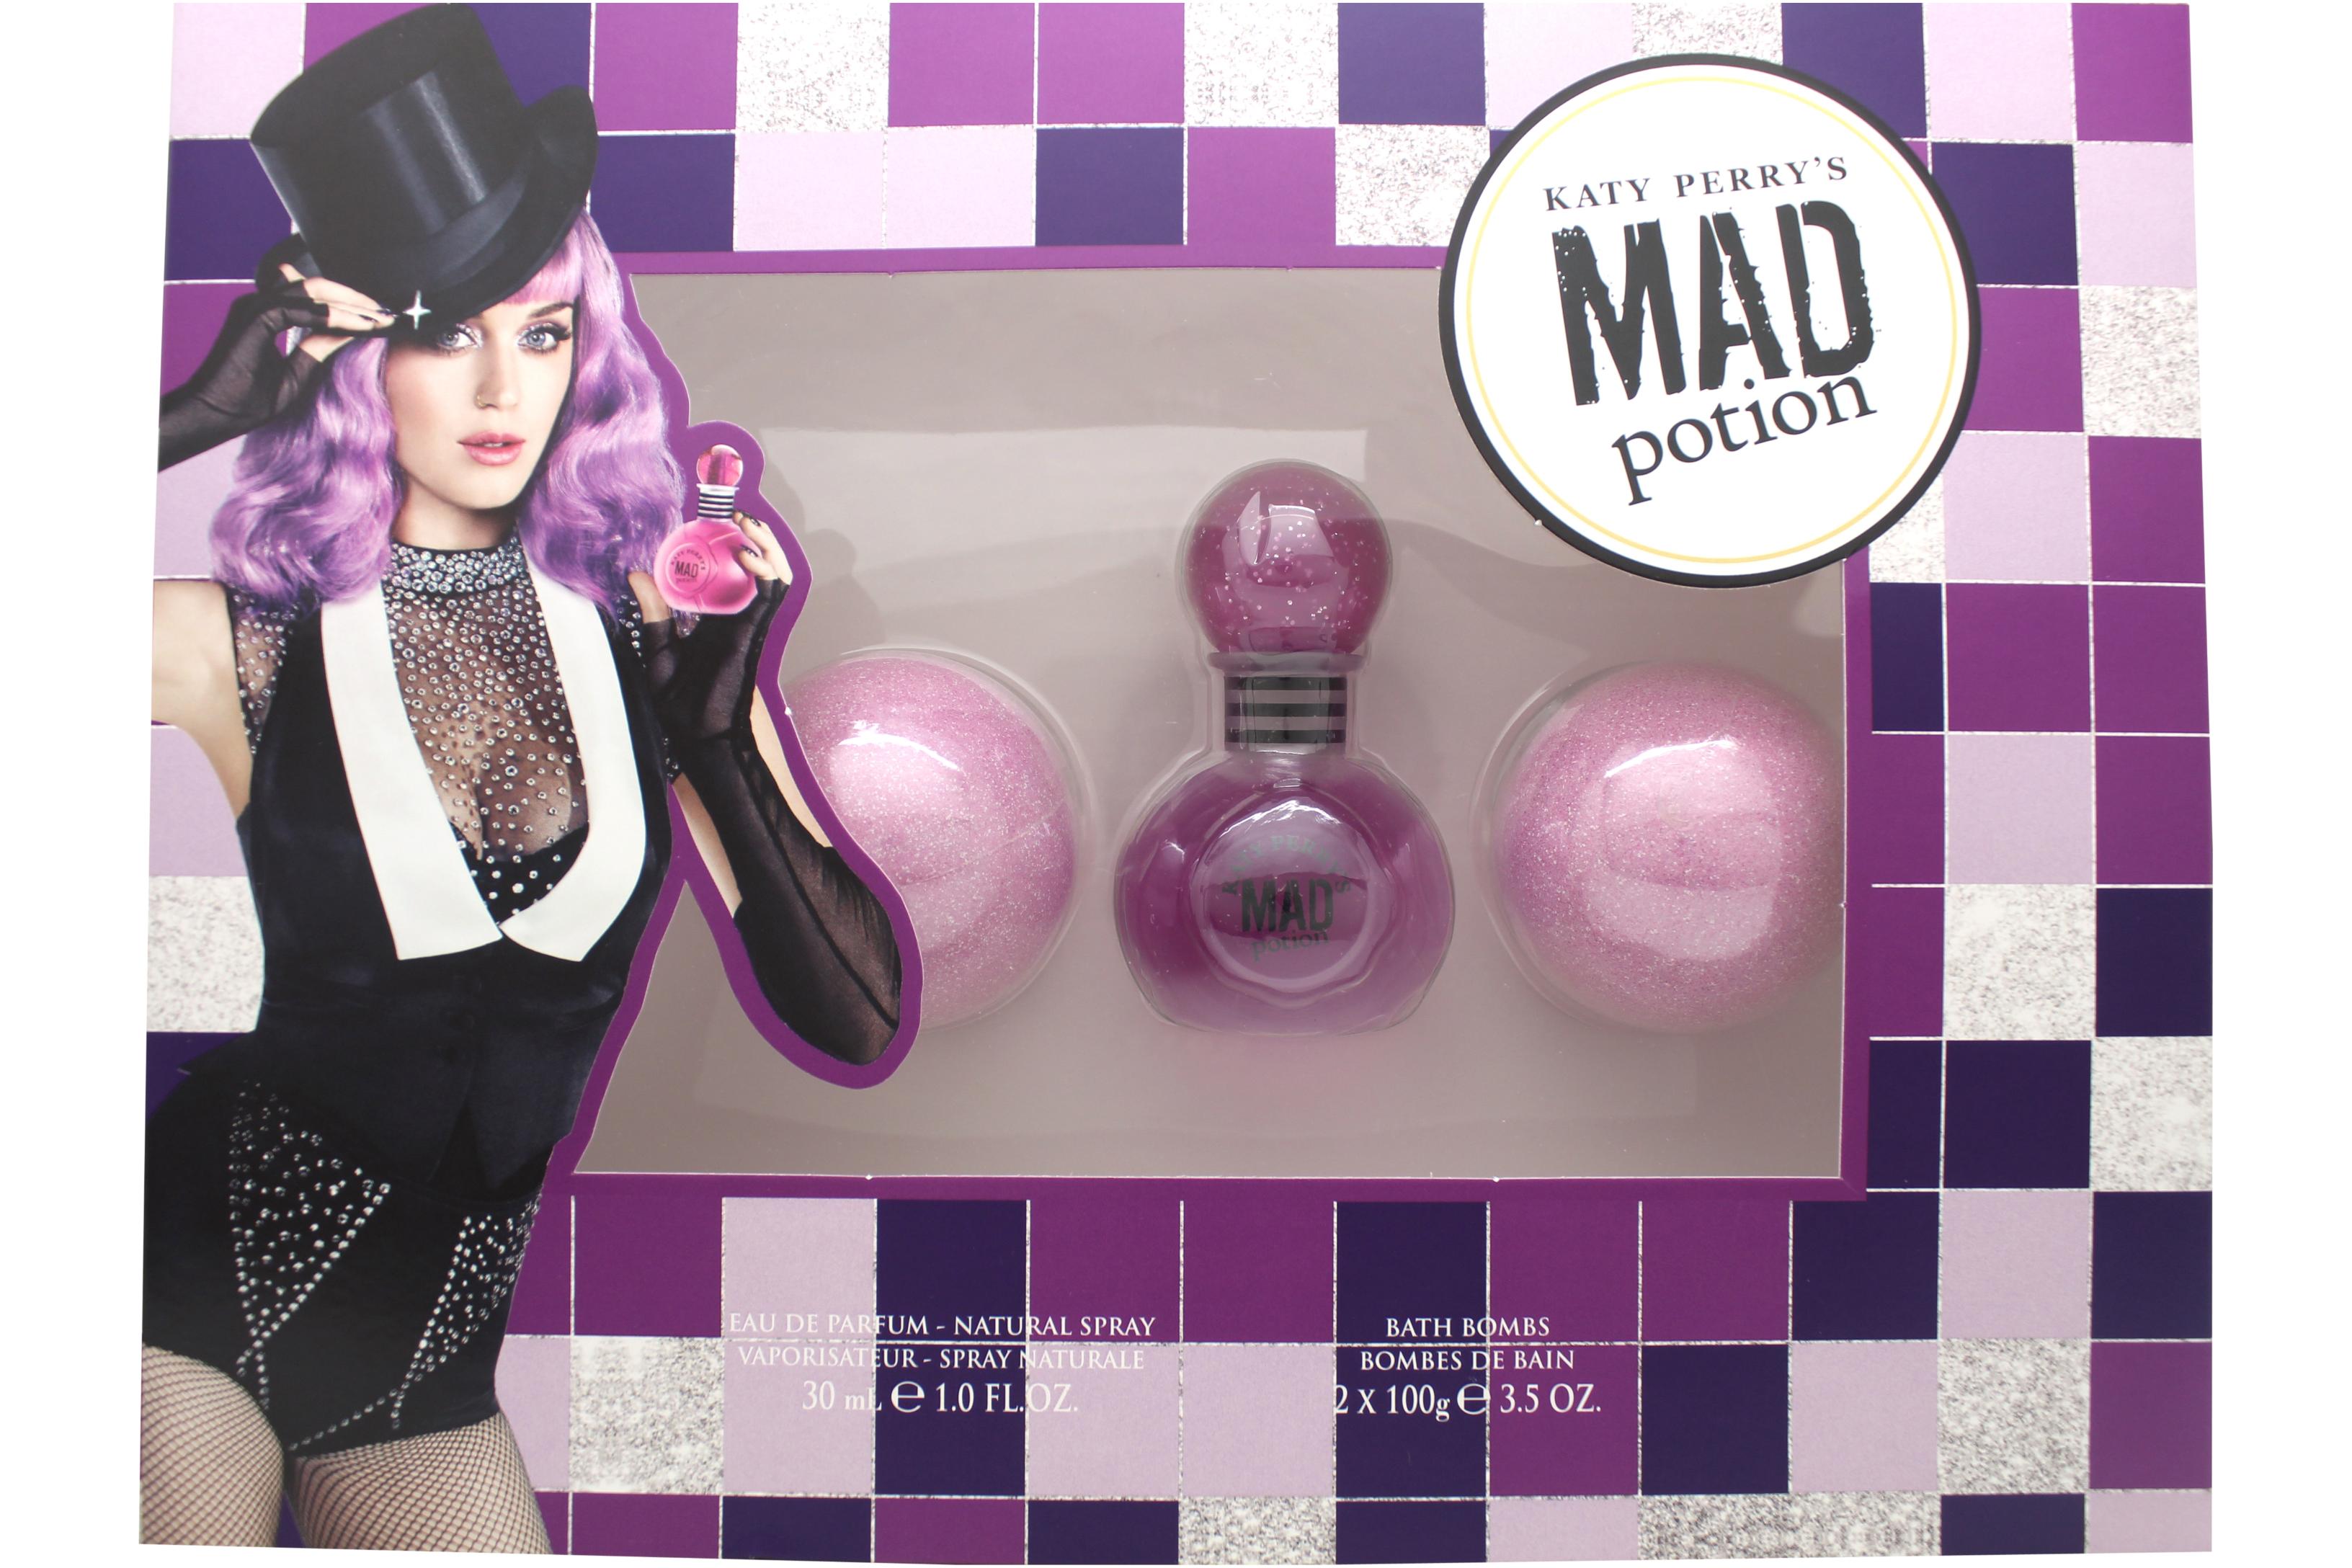 View Katy Perrys Mad Potion Gift Set 30ml EDP 2 x 100g Bath Bomb information